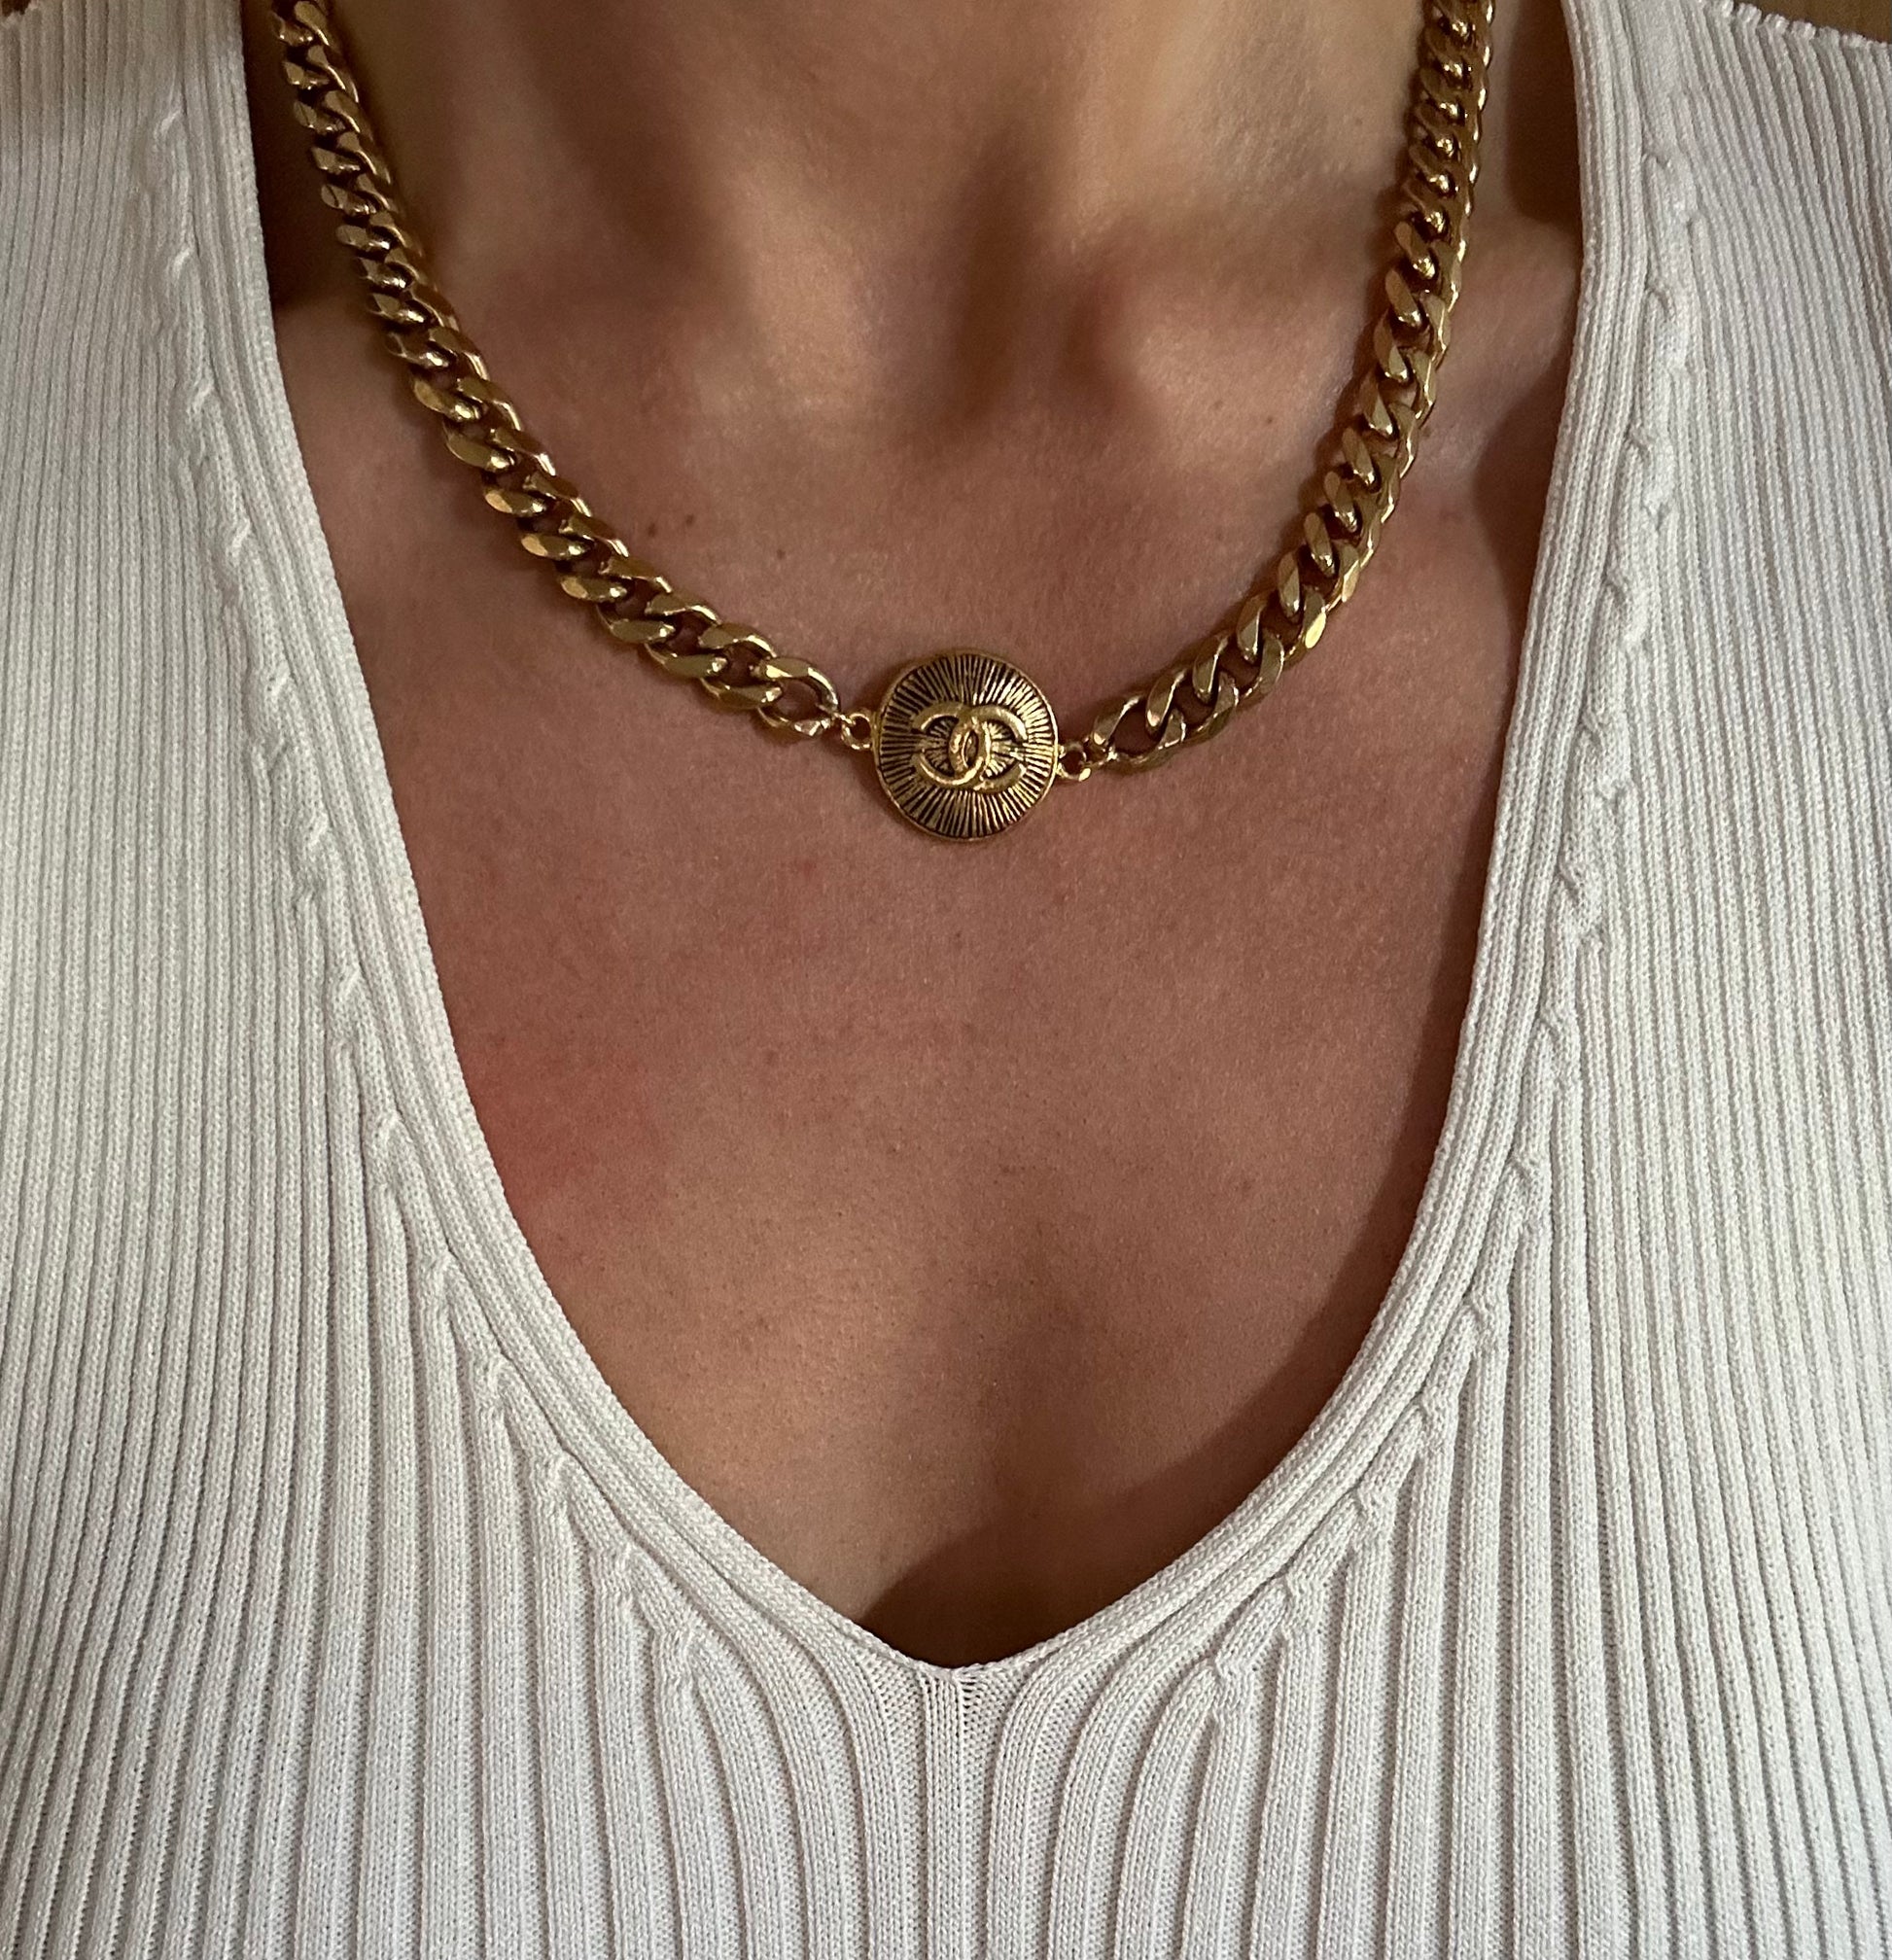 Repurposed Silver Chanel Necklace